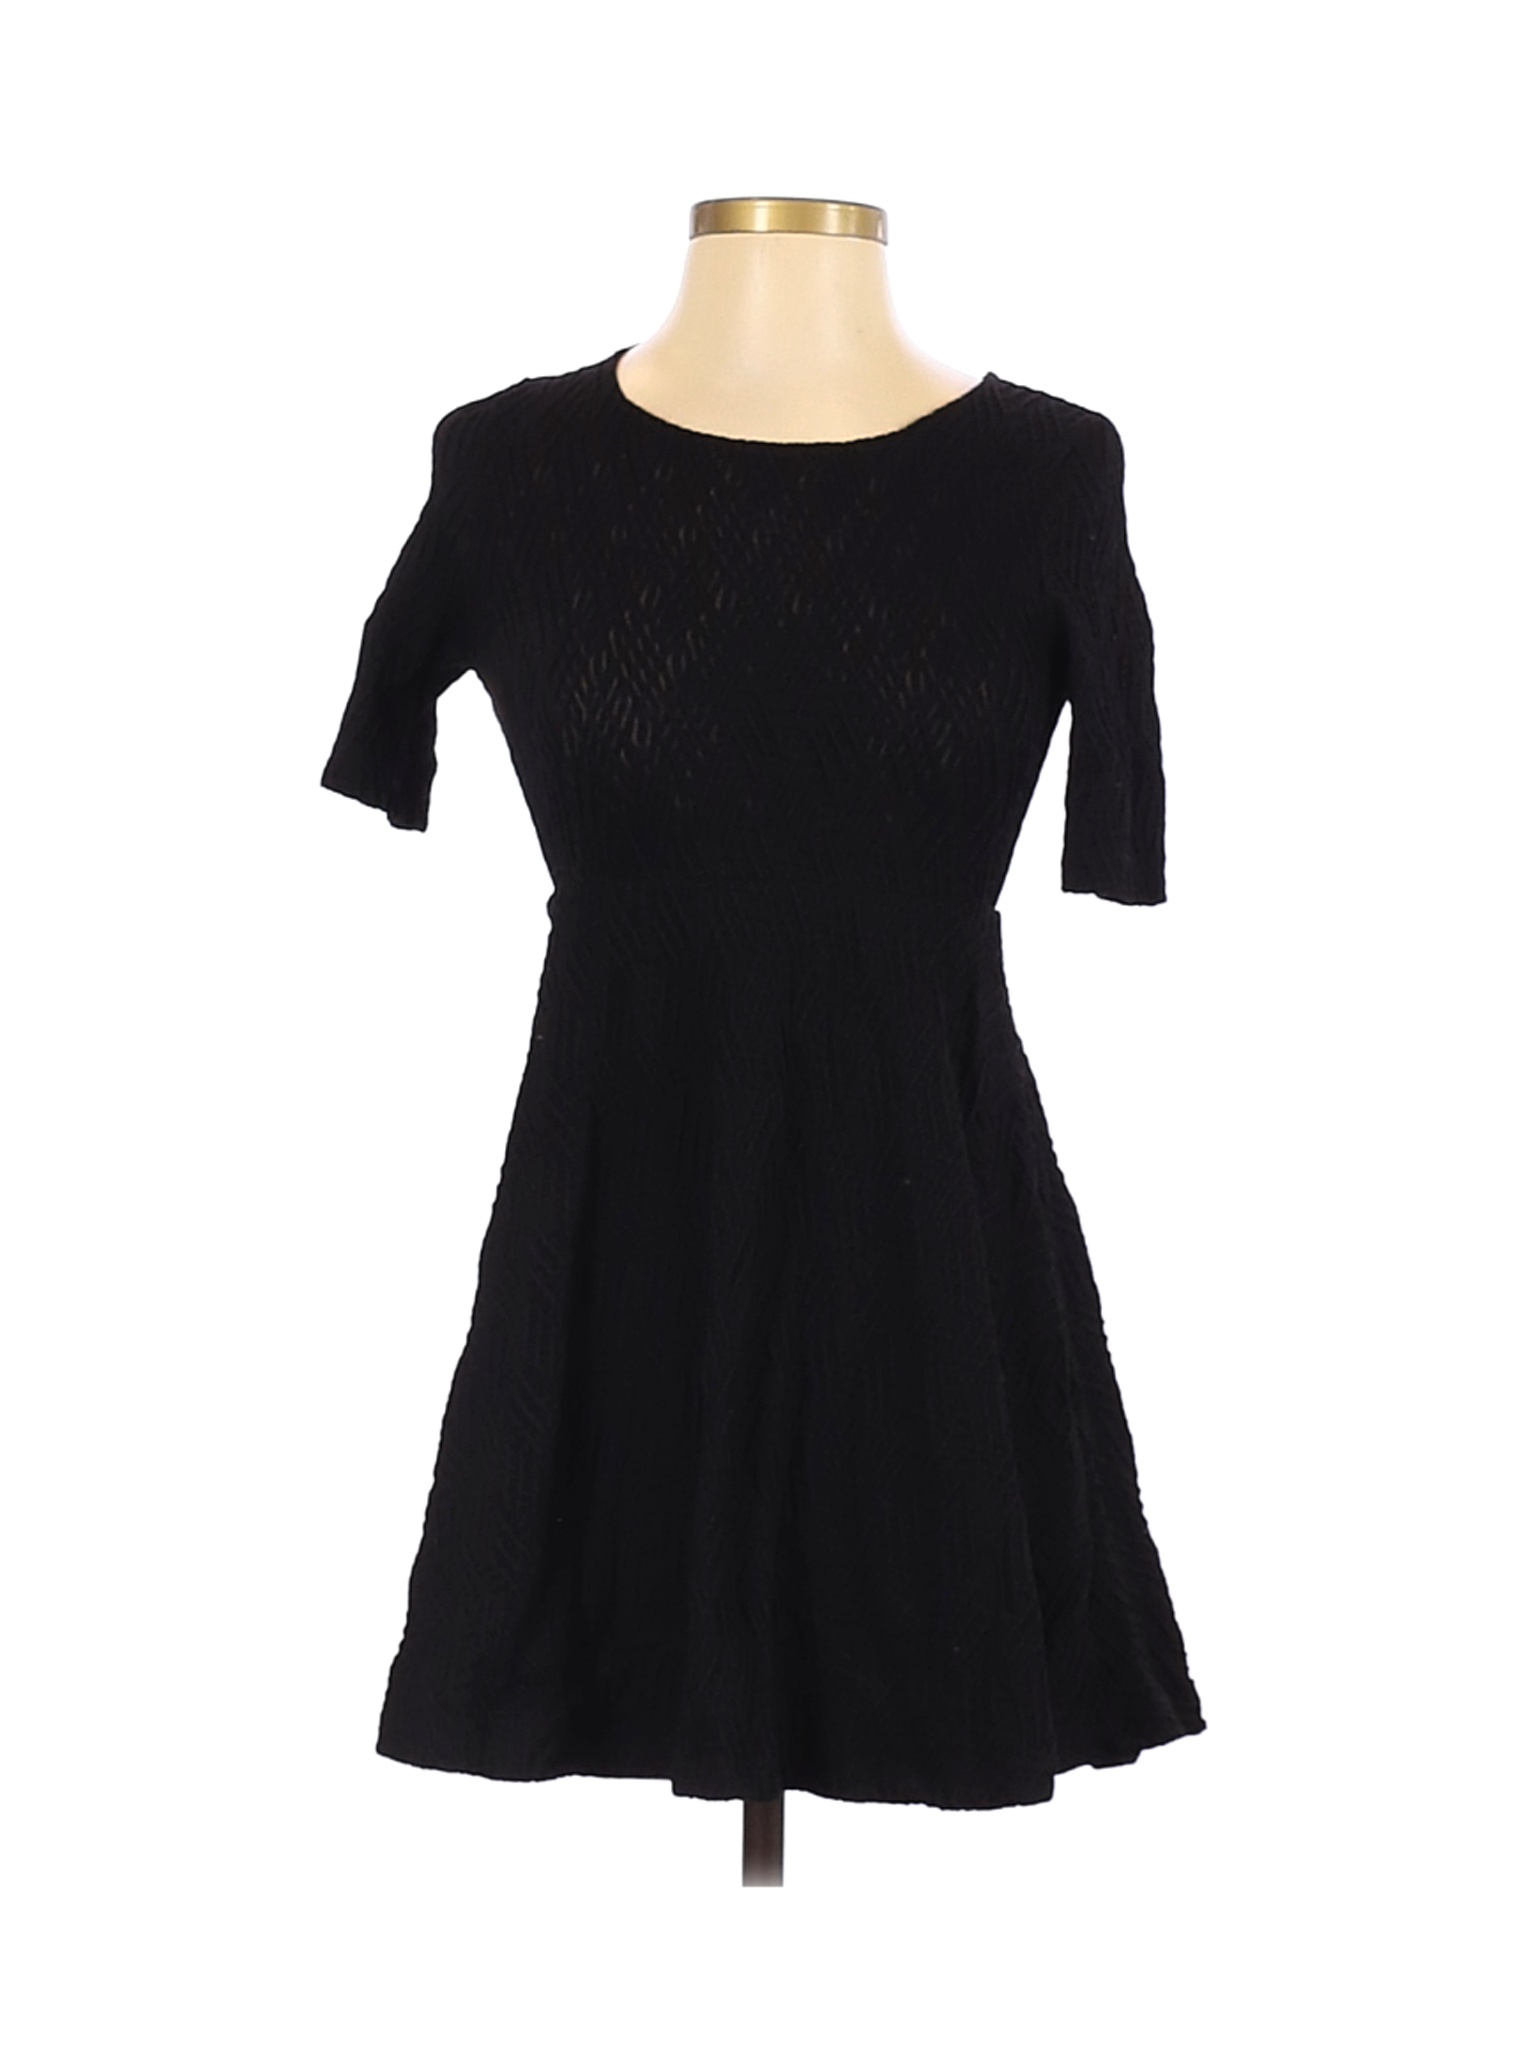 Otis & Maclain Women Black Casual Dress S | eBay